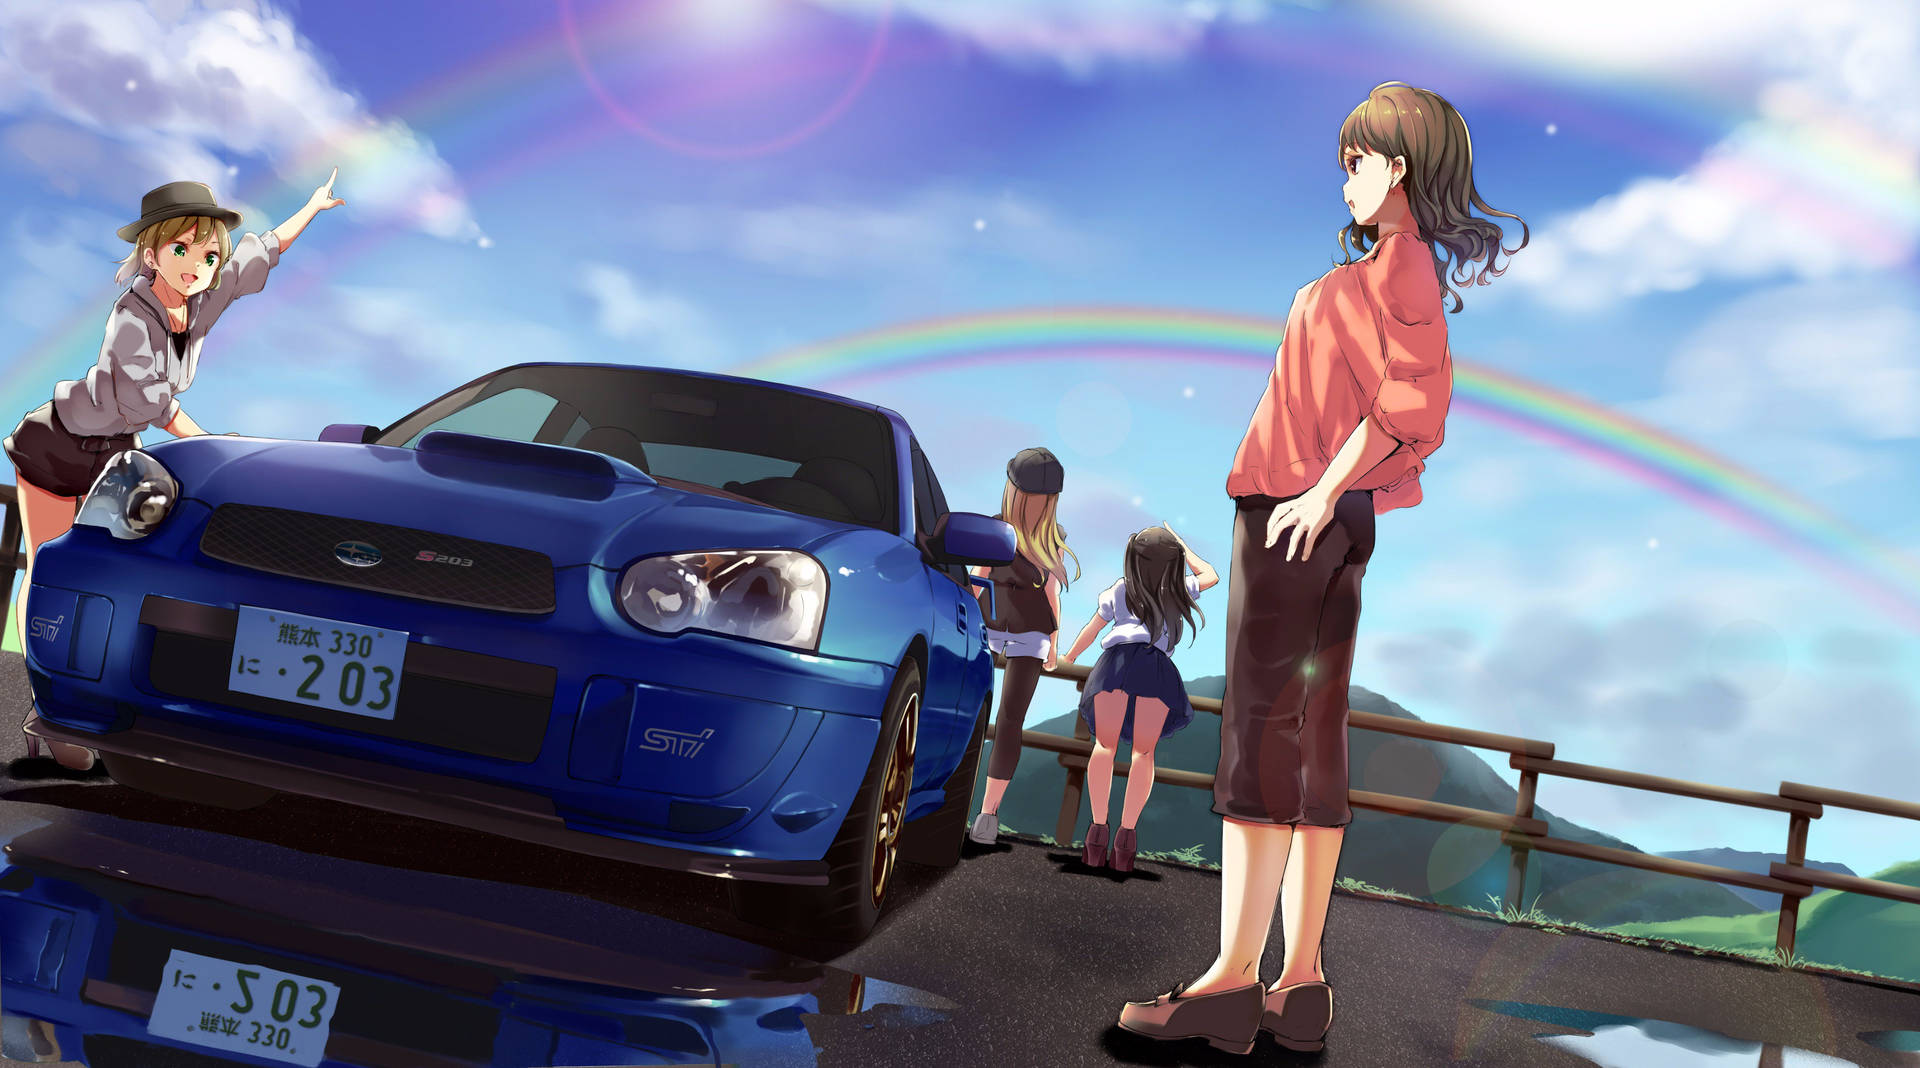 Anime Style Subaru WRX Drifting Action Wallpaper